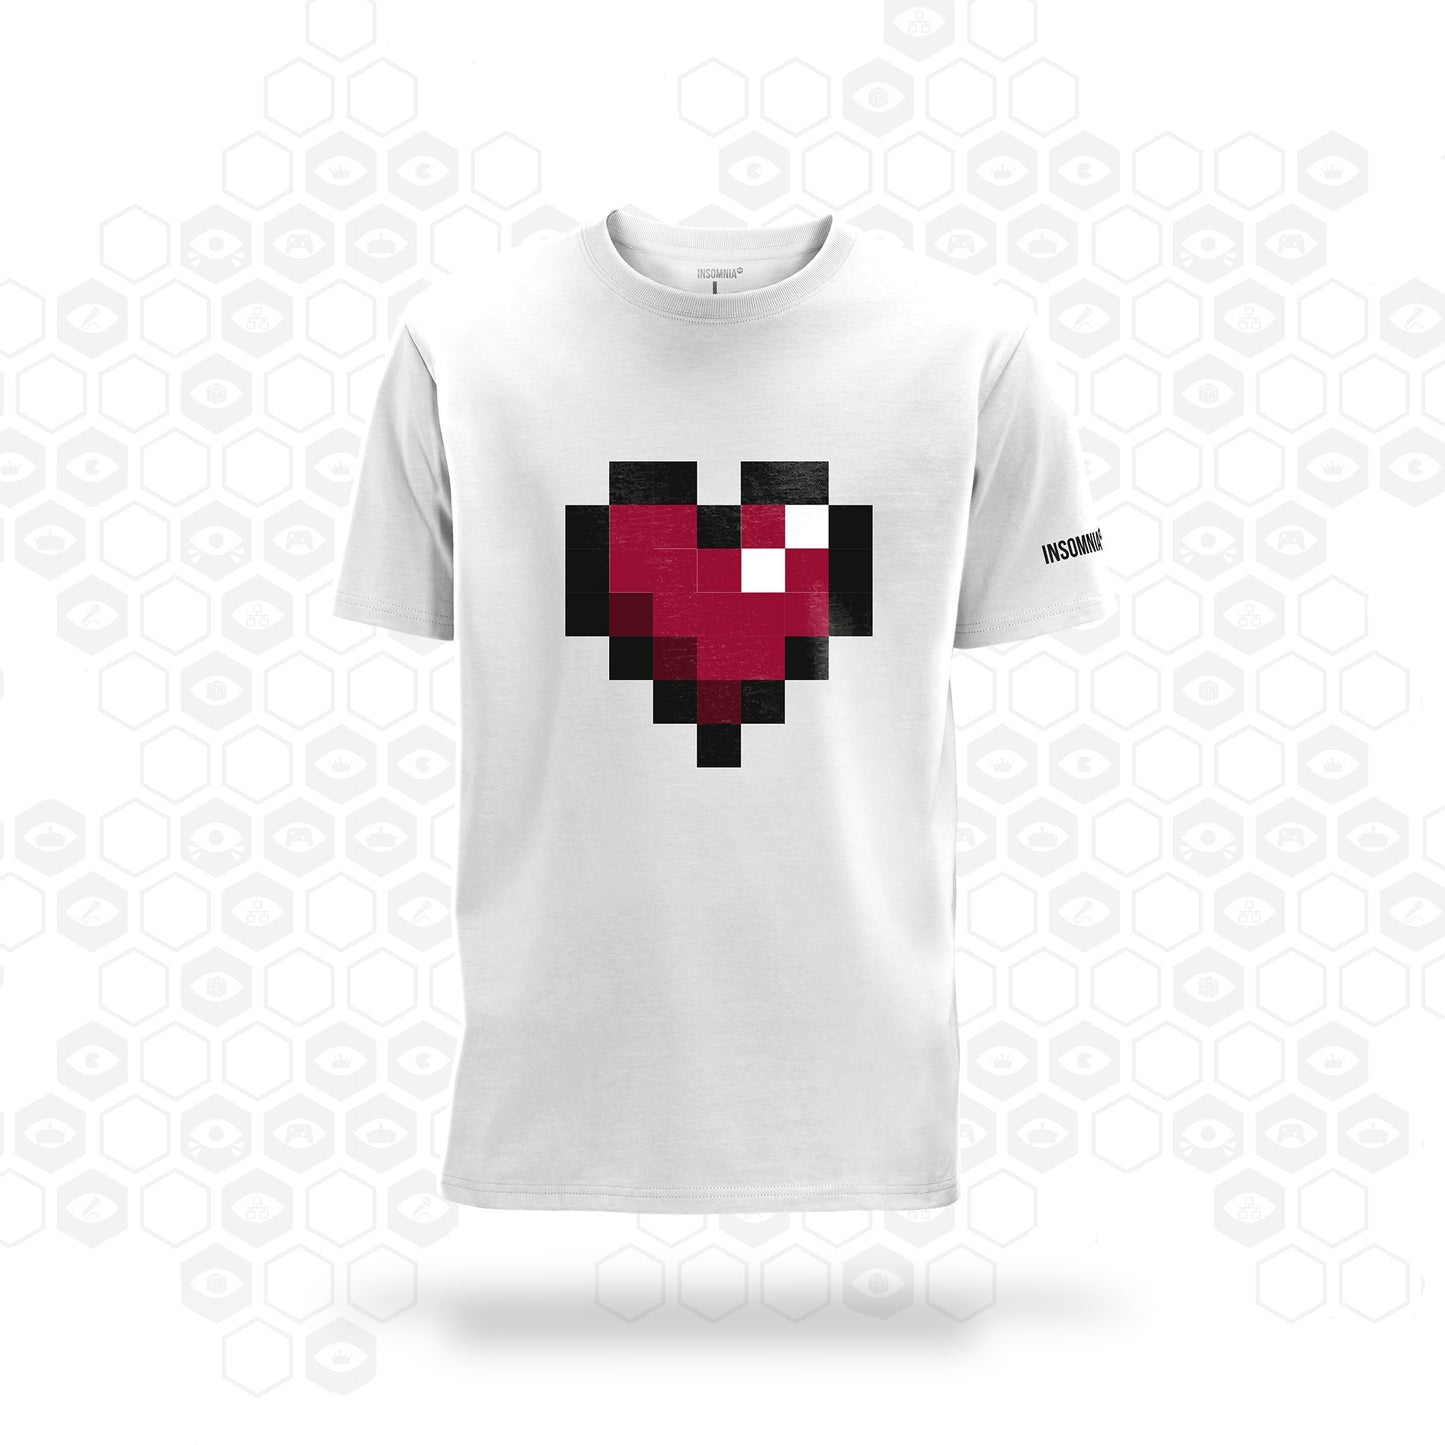 White insomnia t-shirt with 8-bit heart design